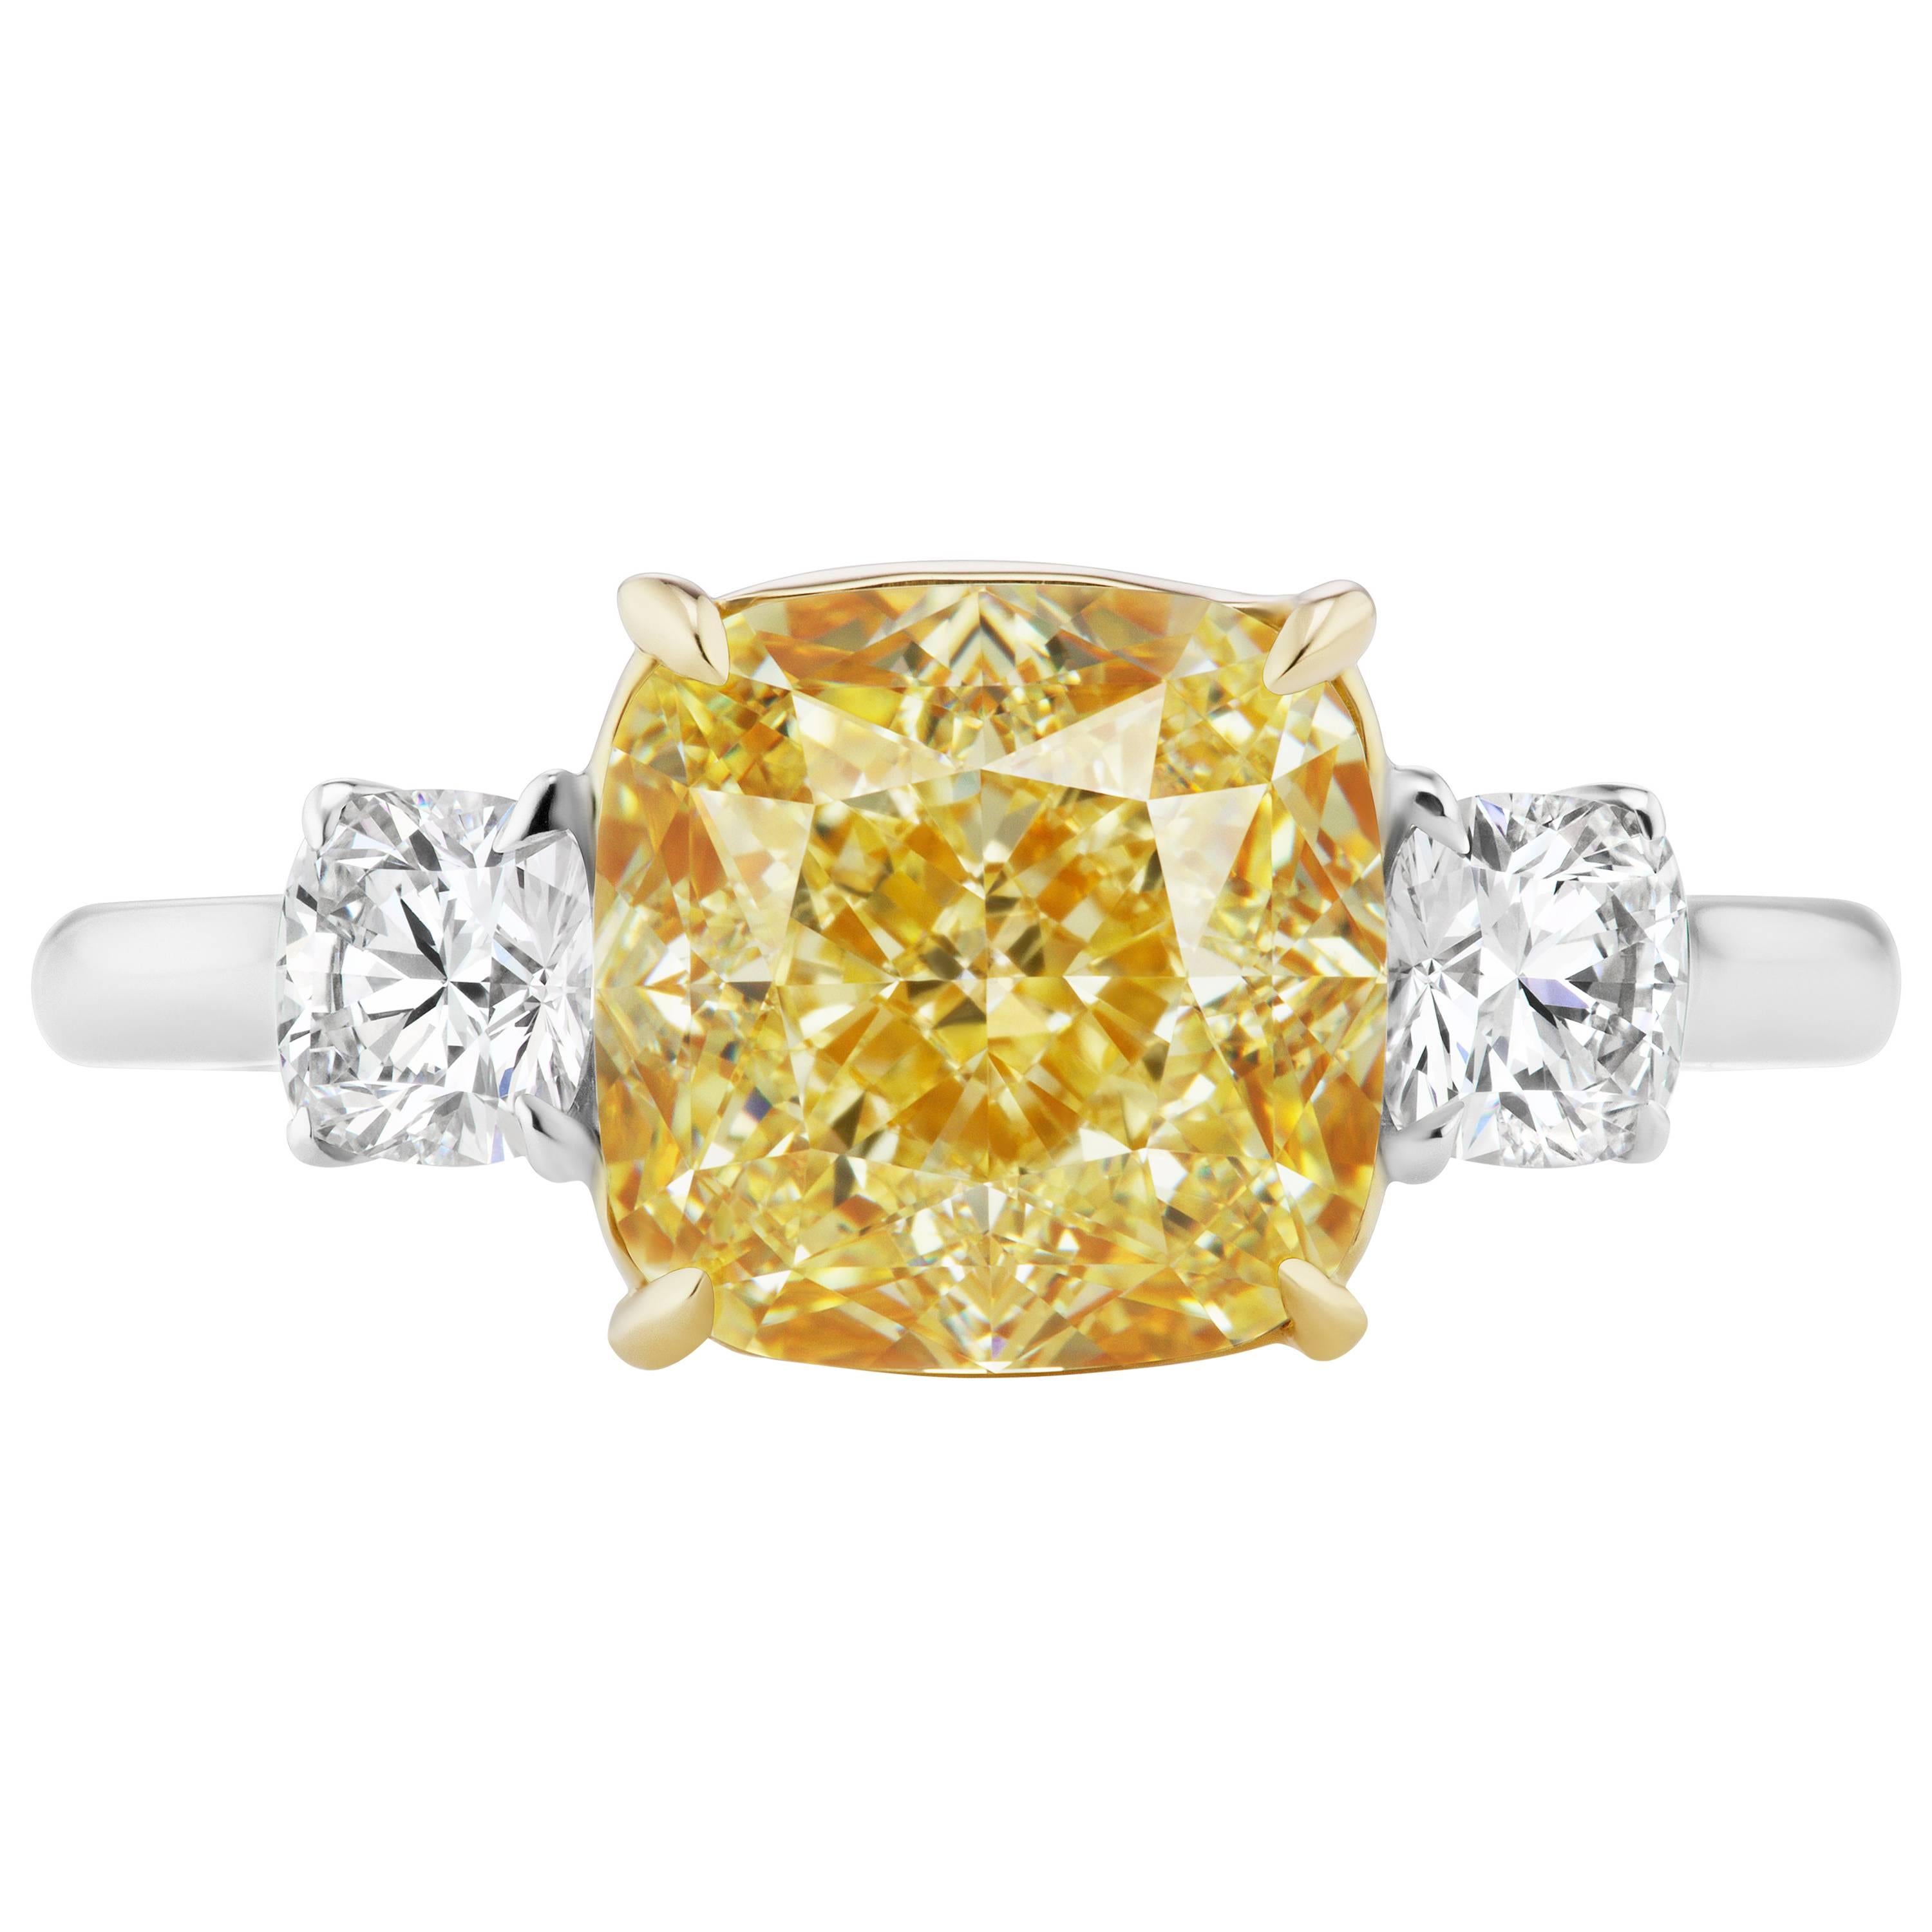 Scarselli 3.74 carat Yellow Cushion Cut Diamond Engagement Ring in Platinum